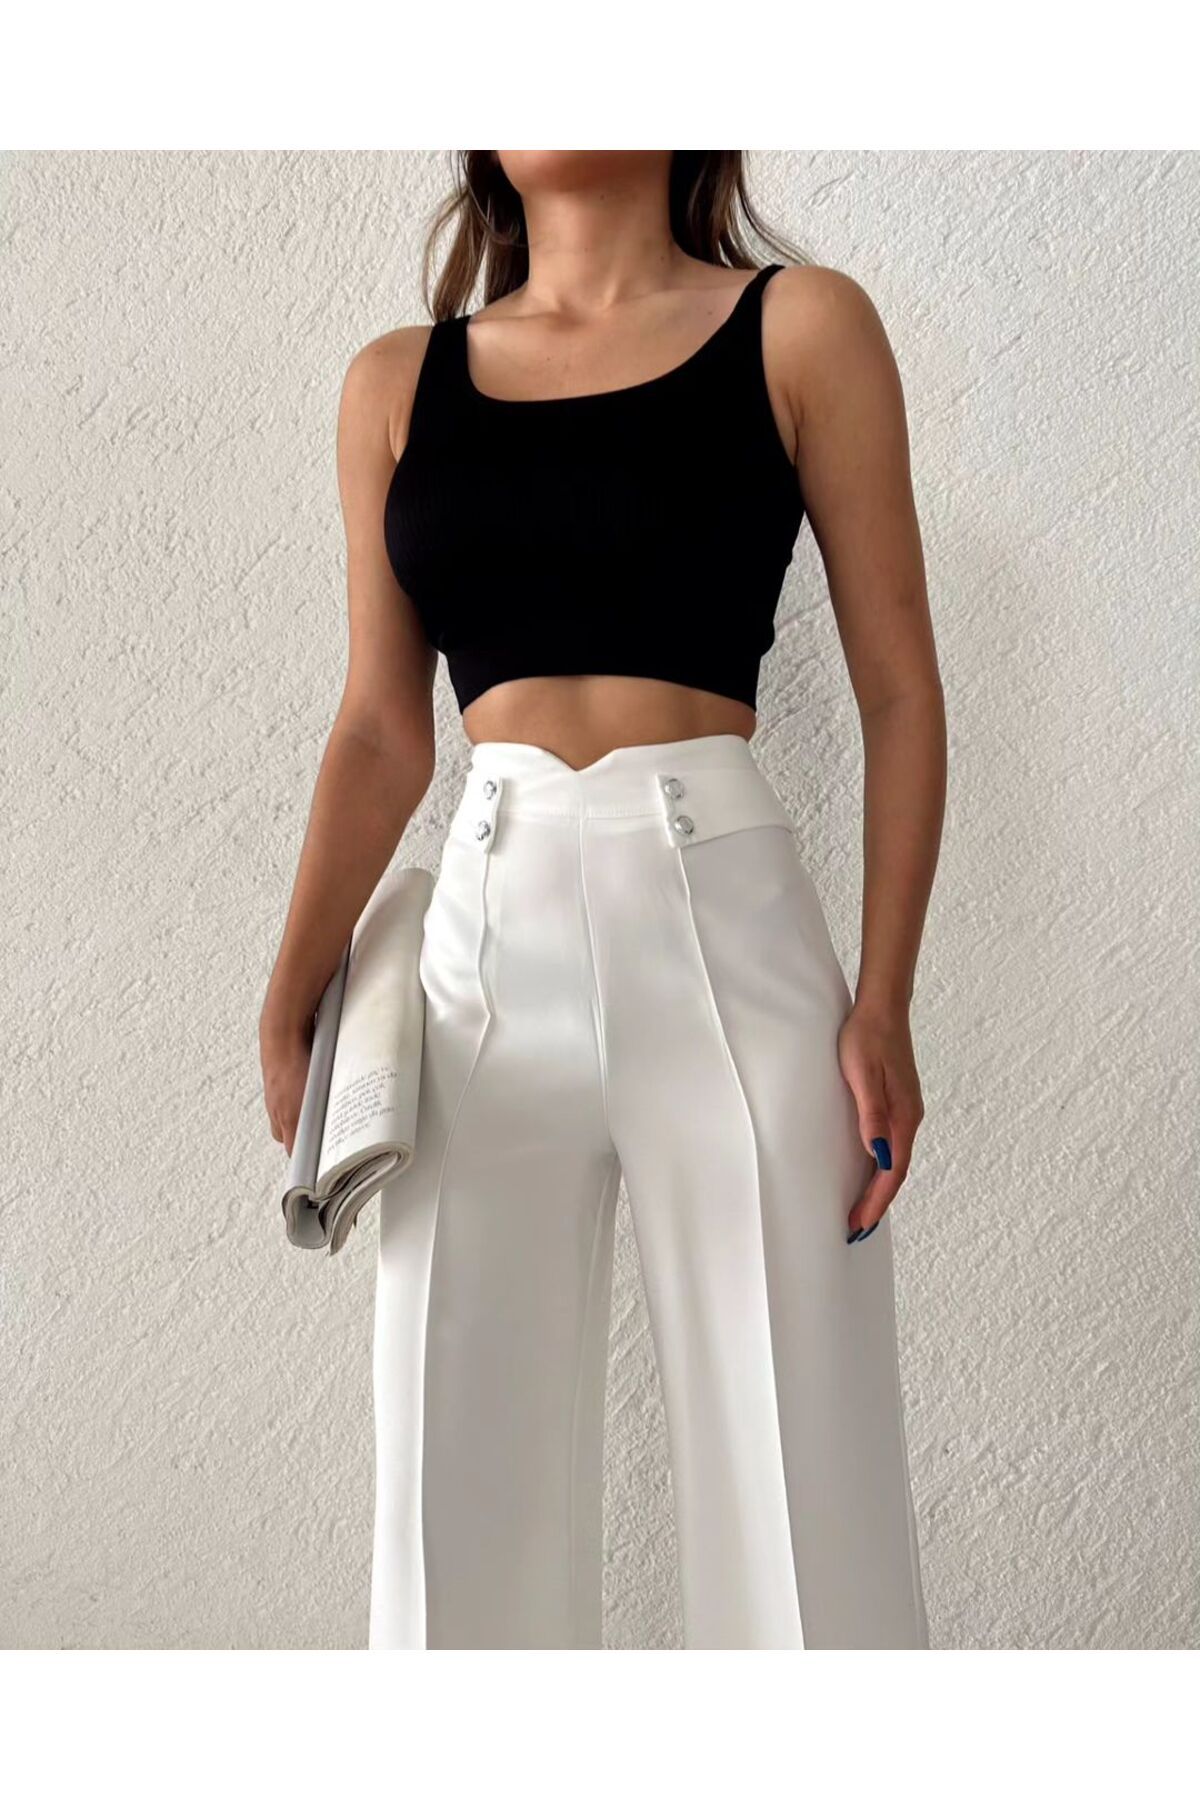 H&A İSTANBUL Kadın Yüksek Bel Palazzo Düğmeli Detay Slim Fit Kalip Pantolon